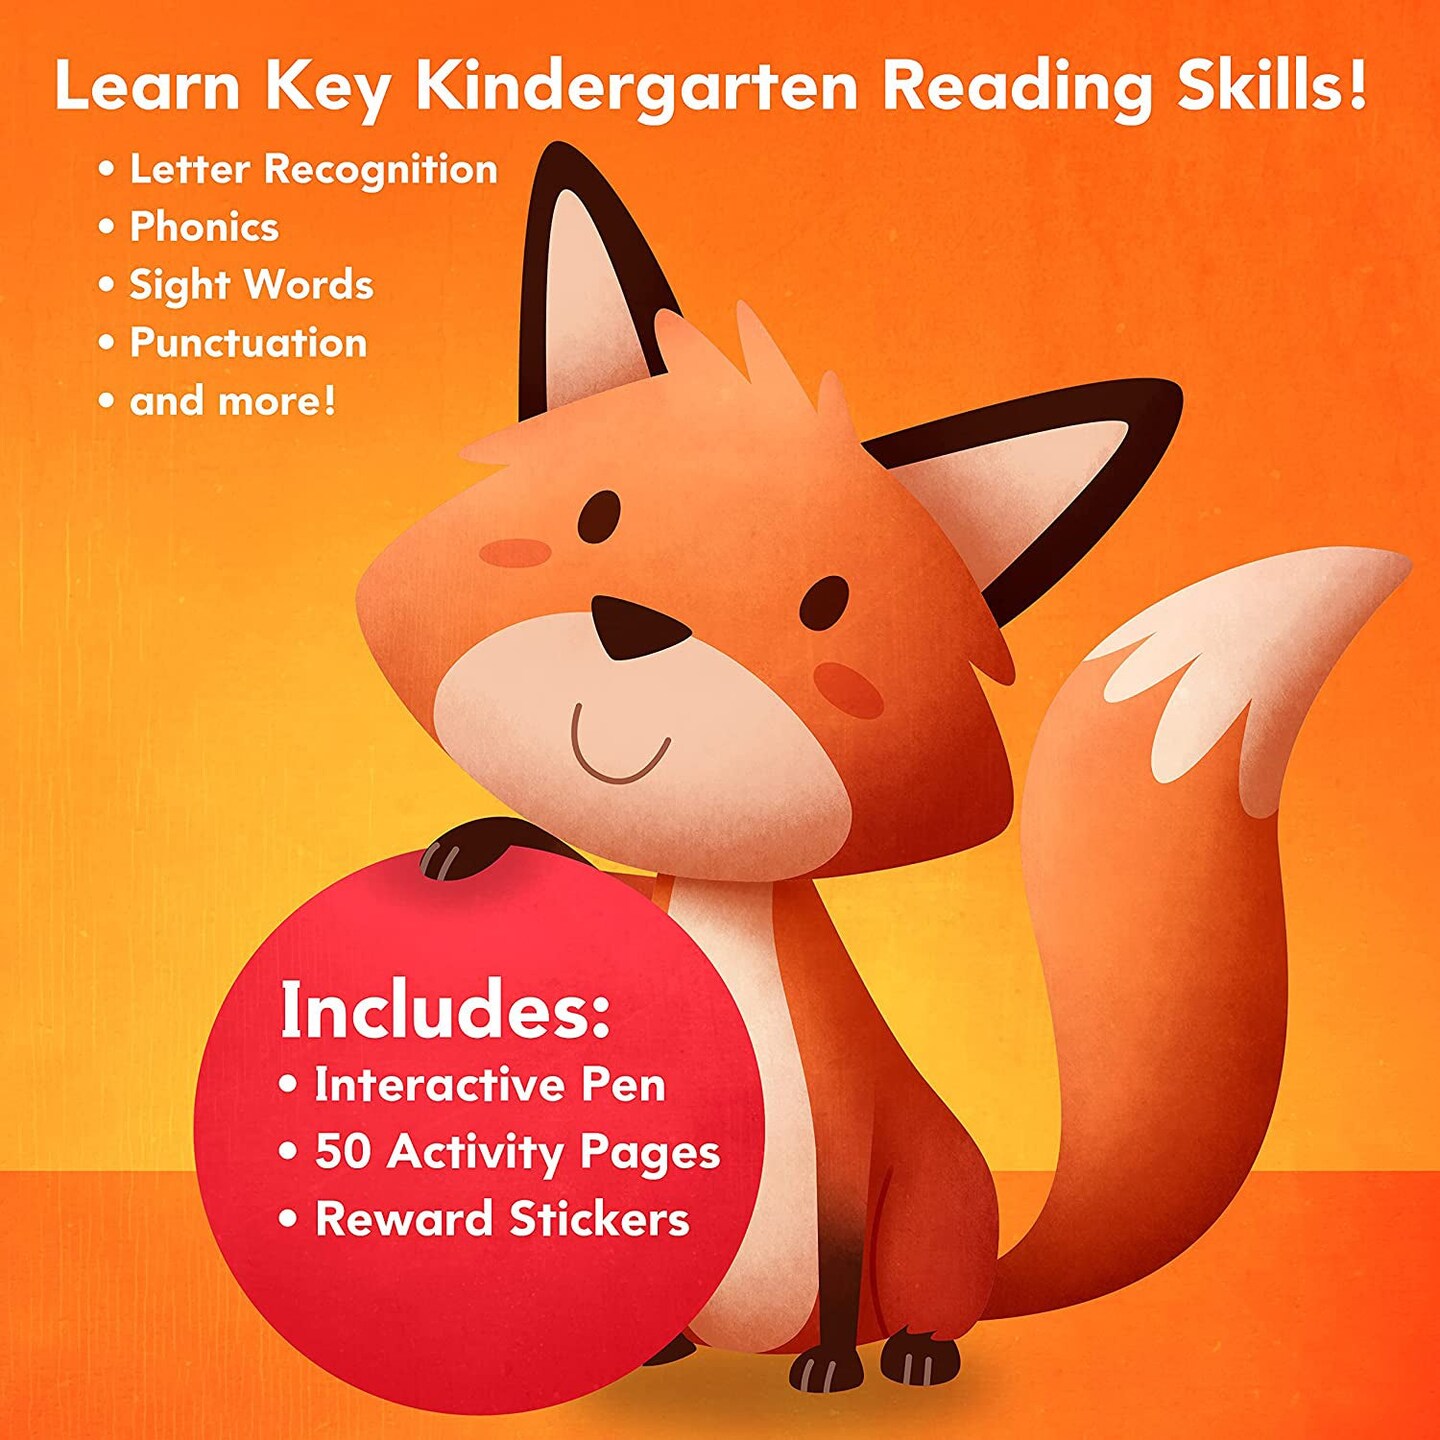 Hot Dots&#xAE; Let&#x27;s Learn Kindergarten Reading!